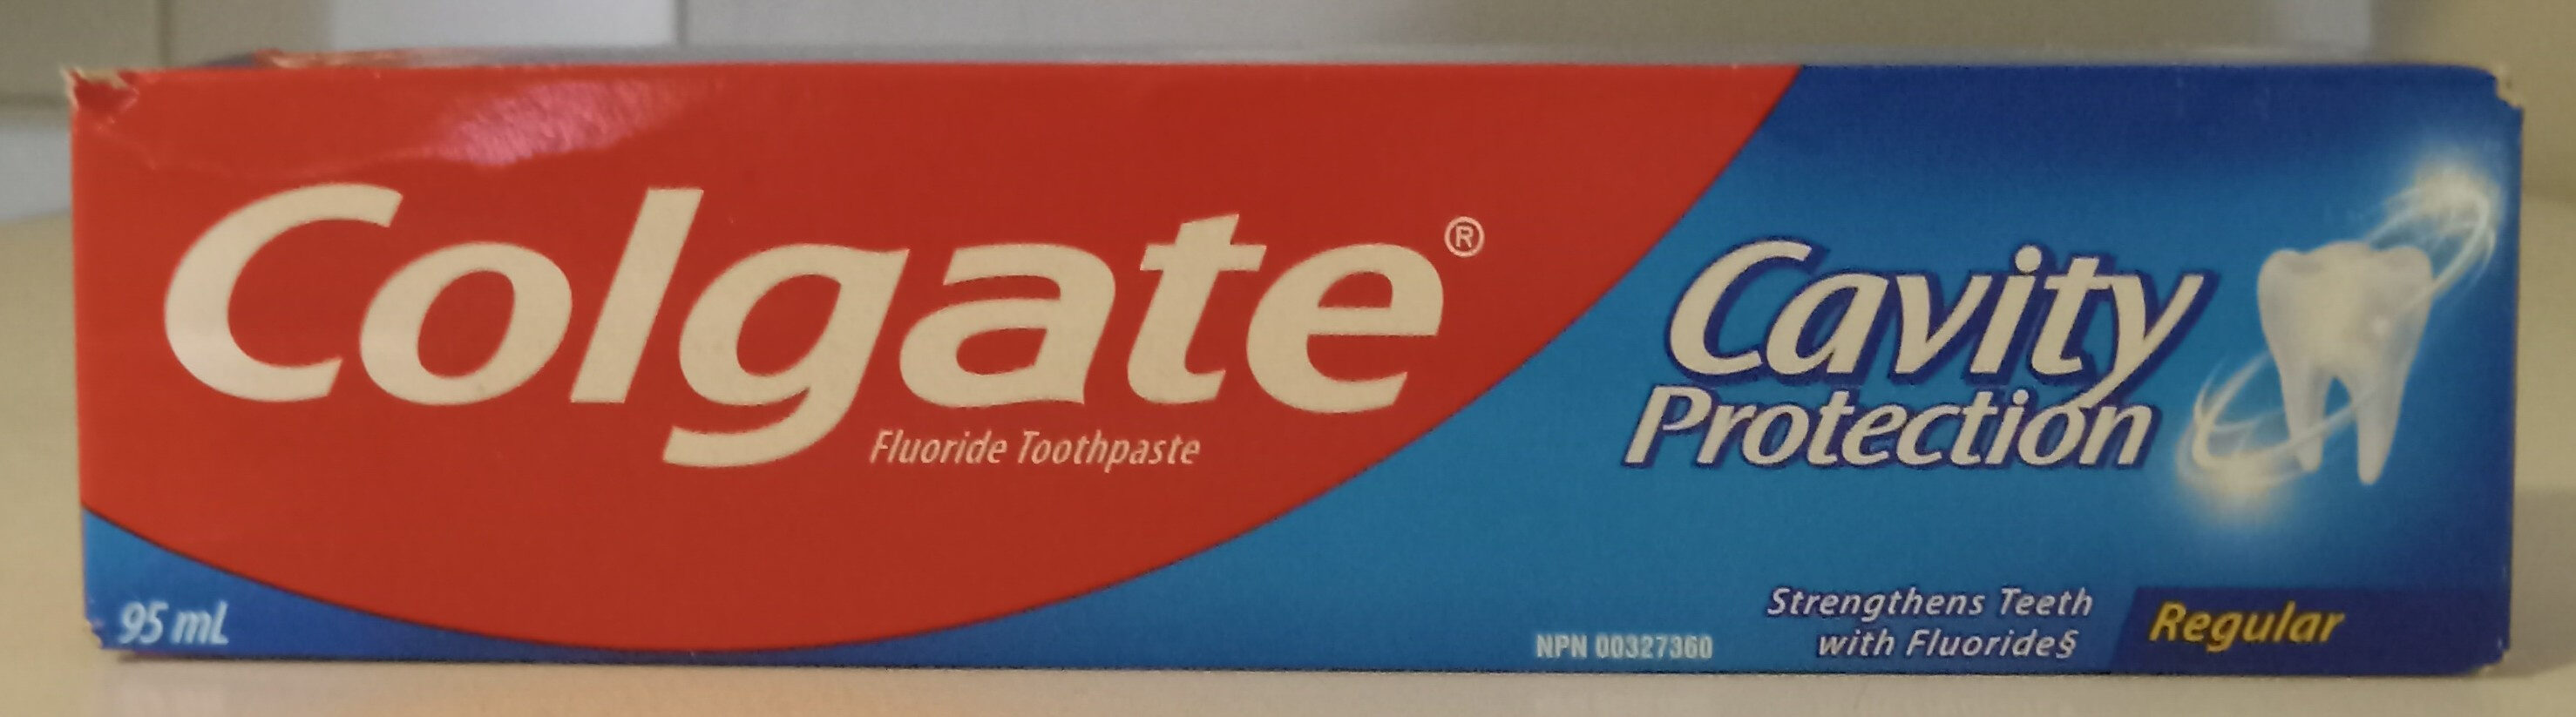 Regular Cavity Protection Flouride Toothpaste - Produkt - en